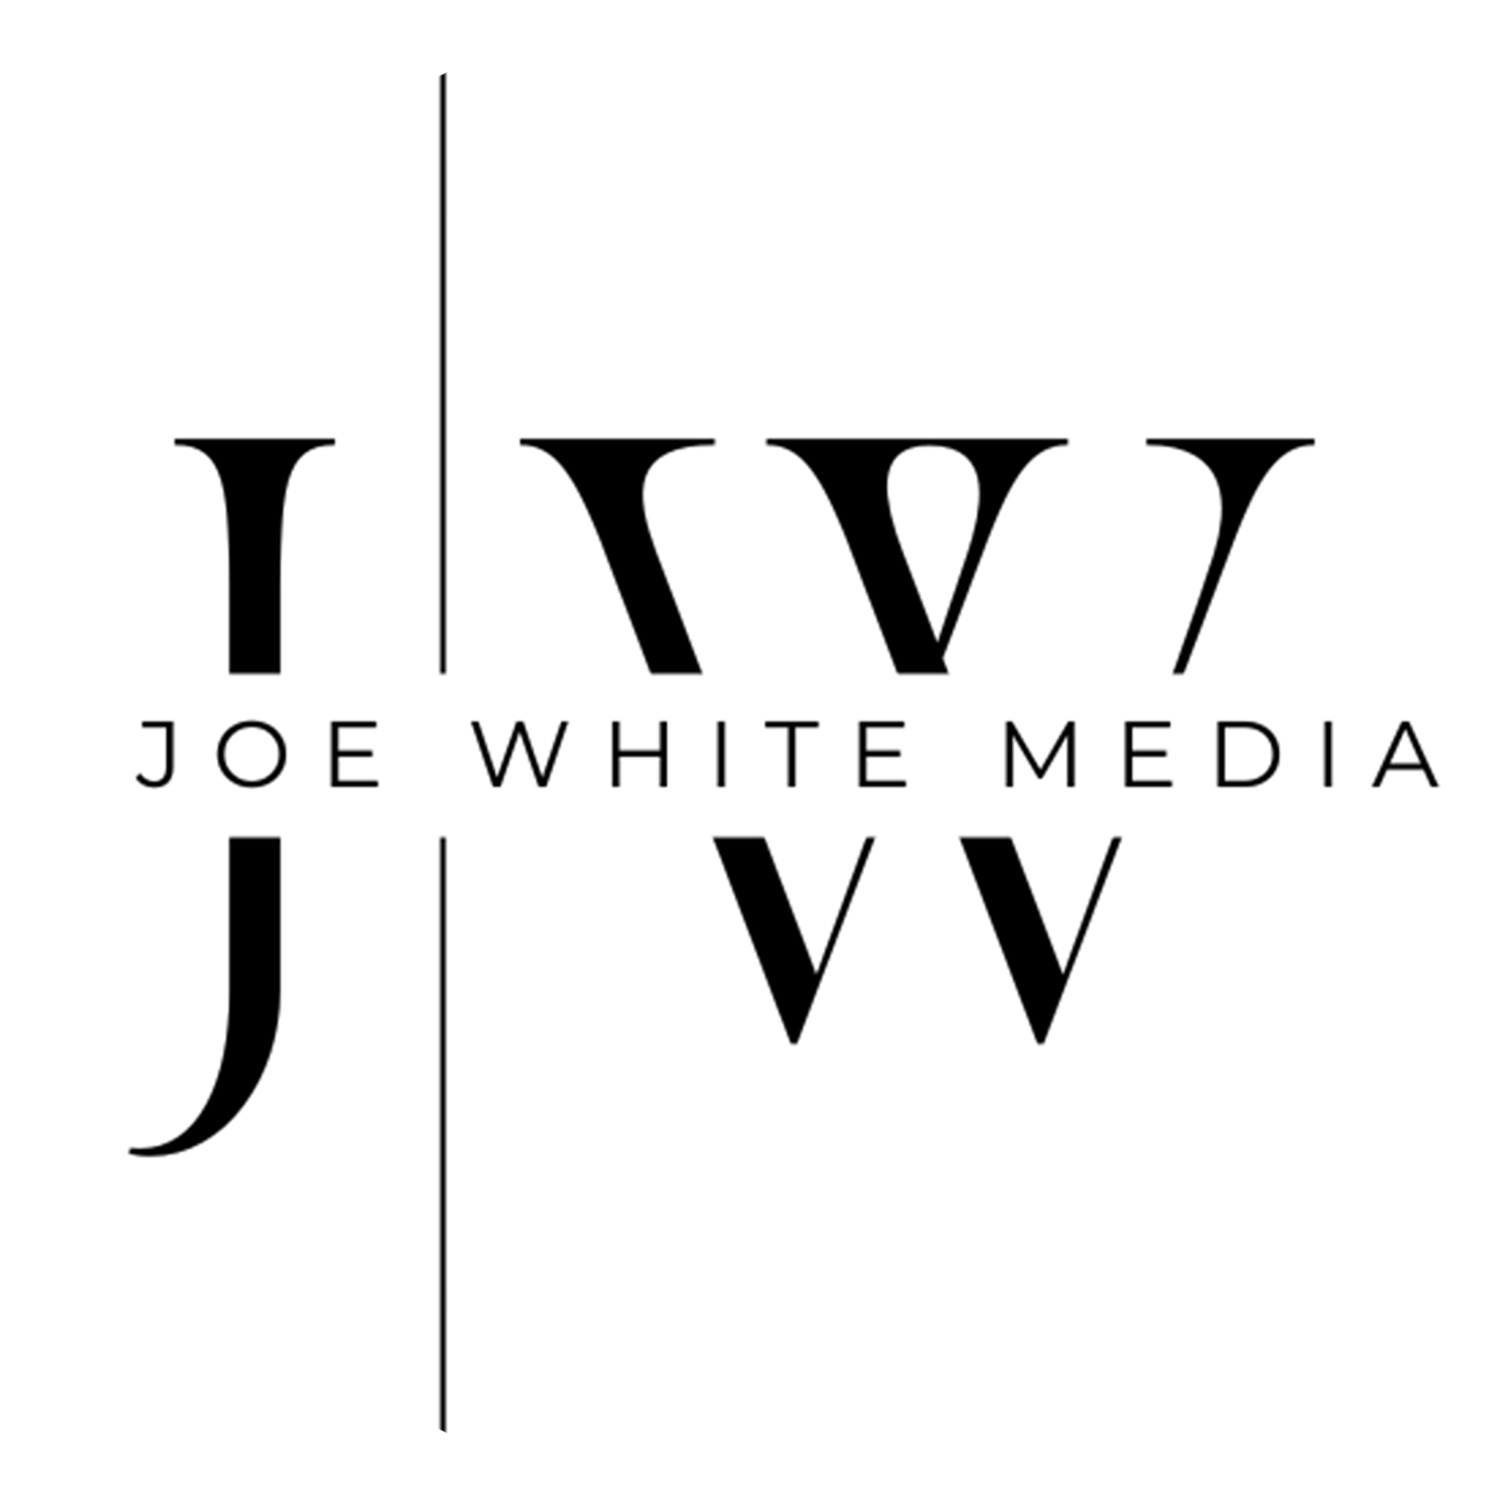 JOE WHITE